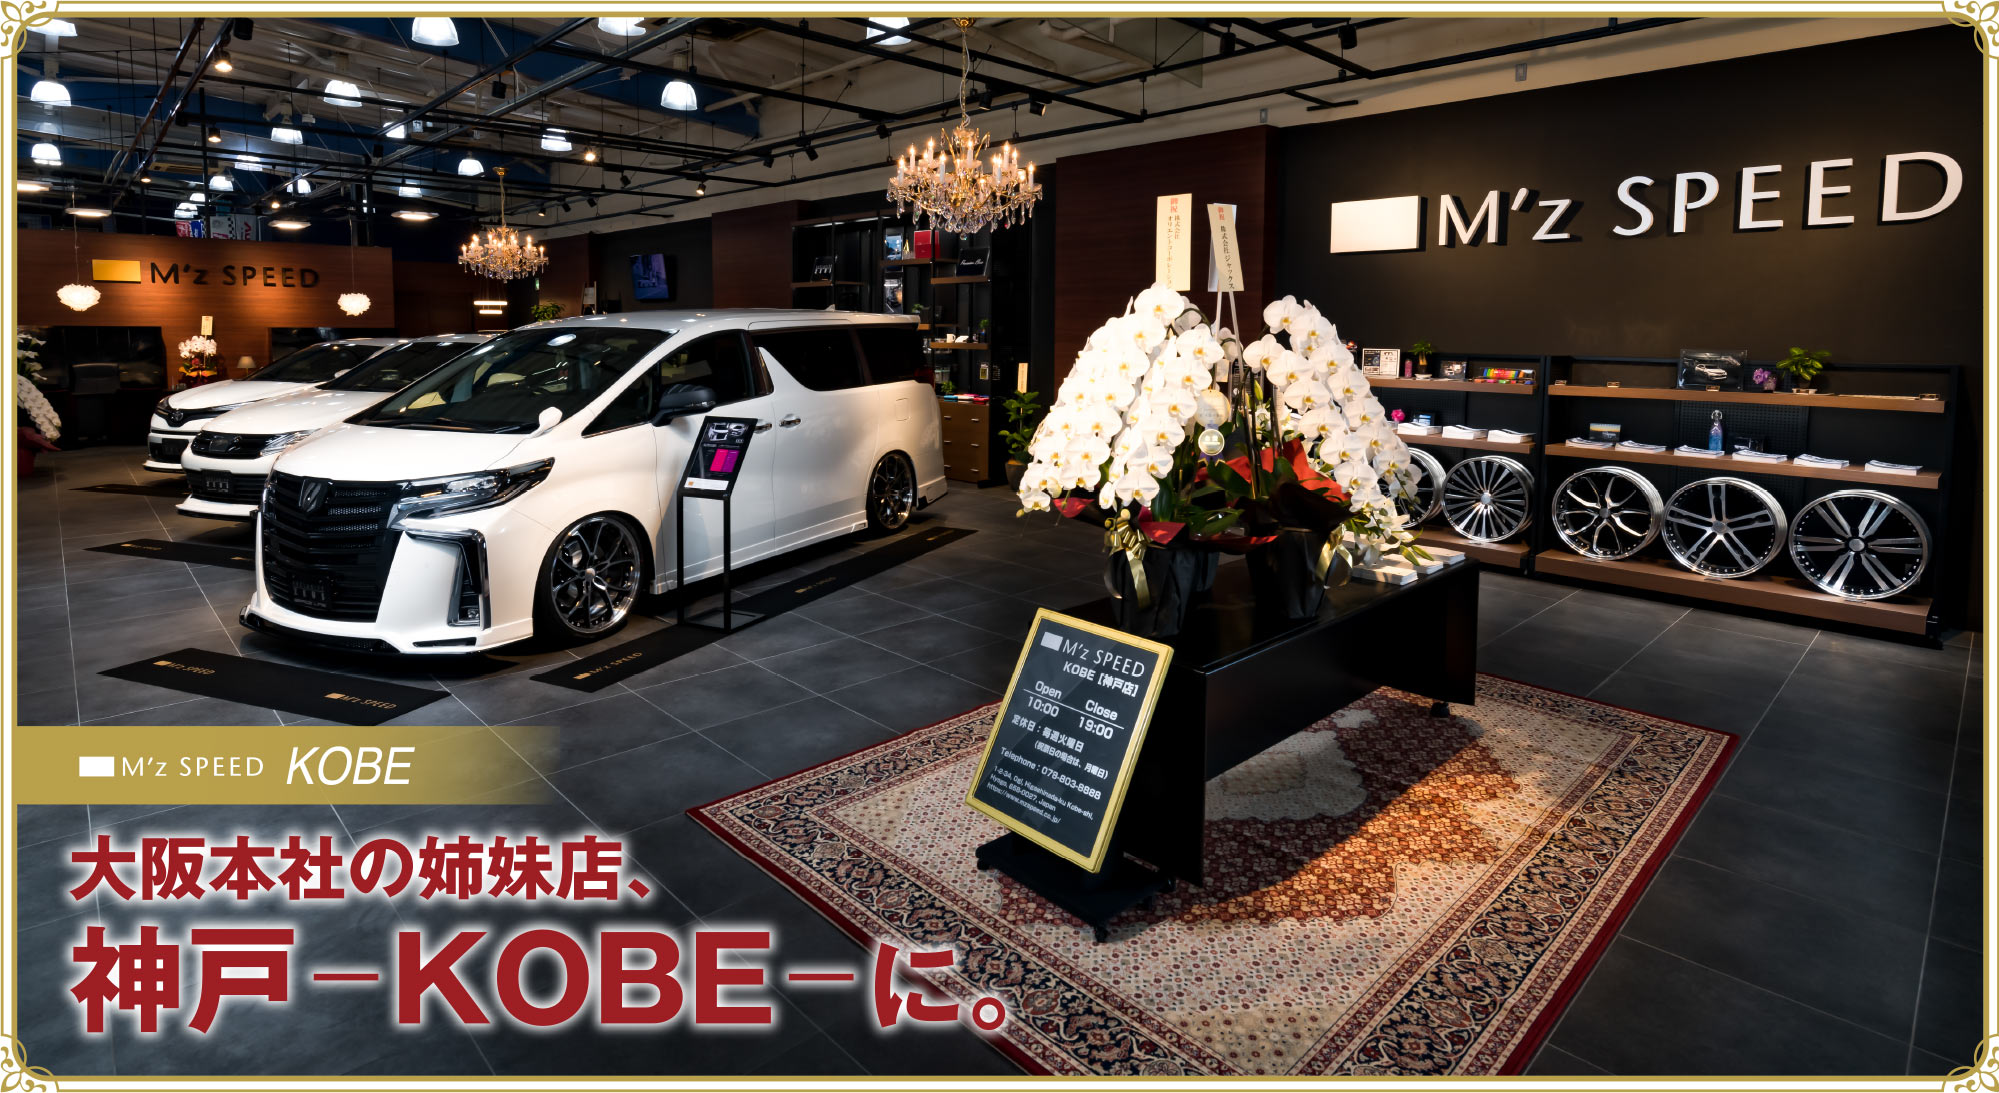 M'z SPEED KOBE 大阪本社に加えて、神戸にも関西拠点に姉妹店、ニューオープン！